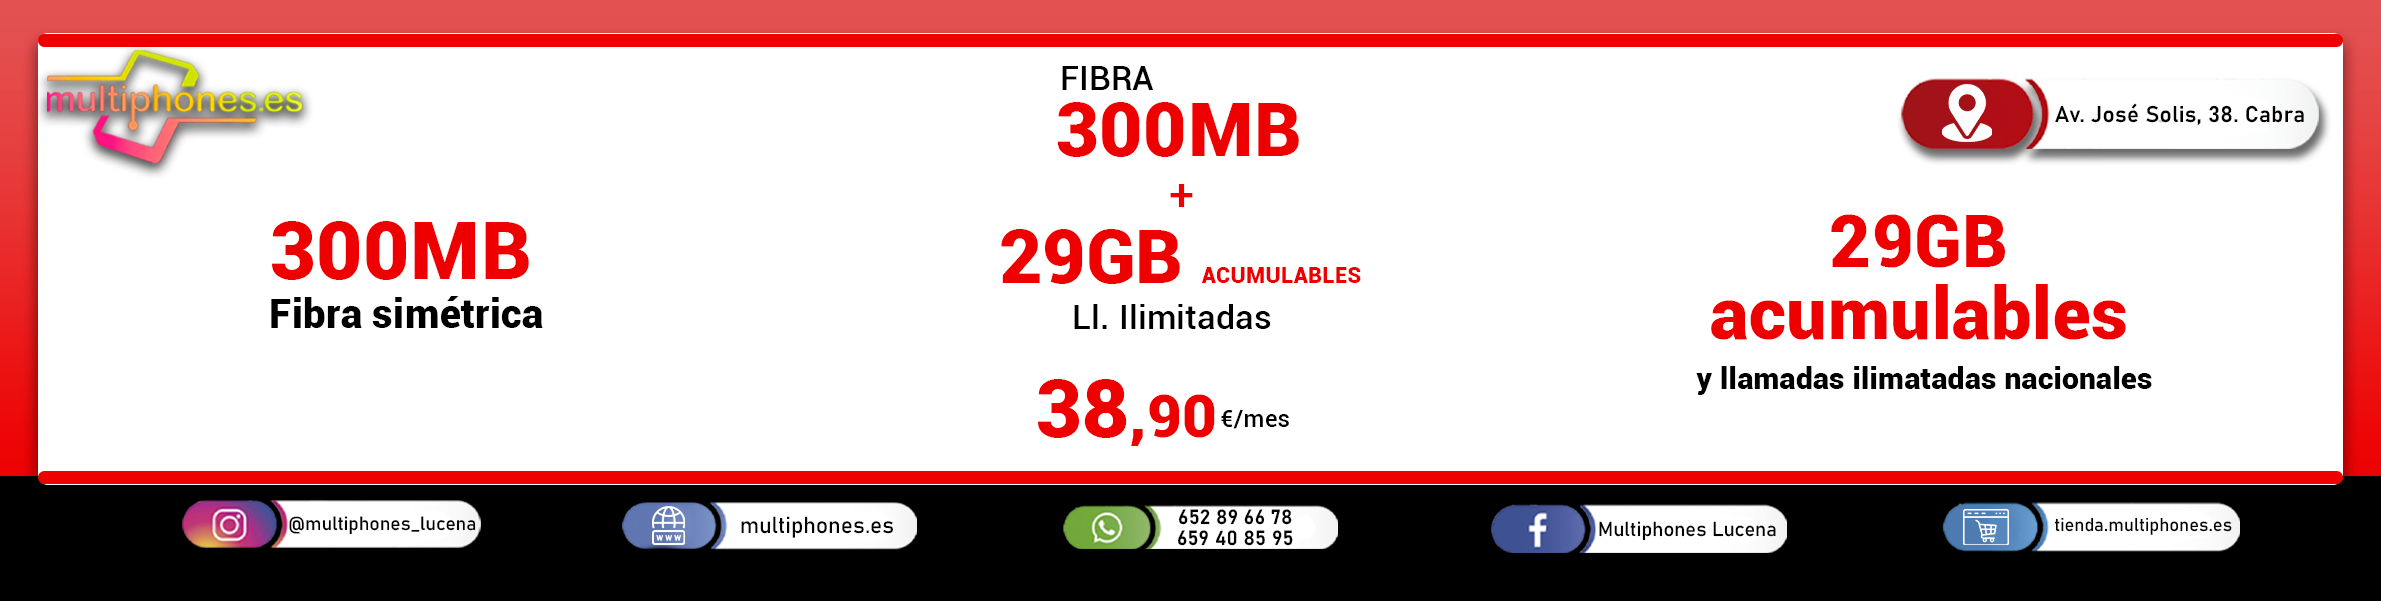 PEPEPHONE – FIBRA 300MB + 29GB